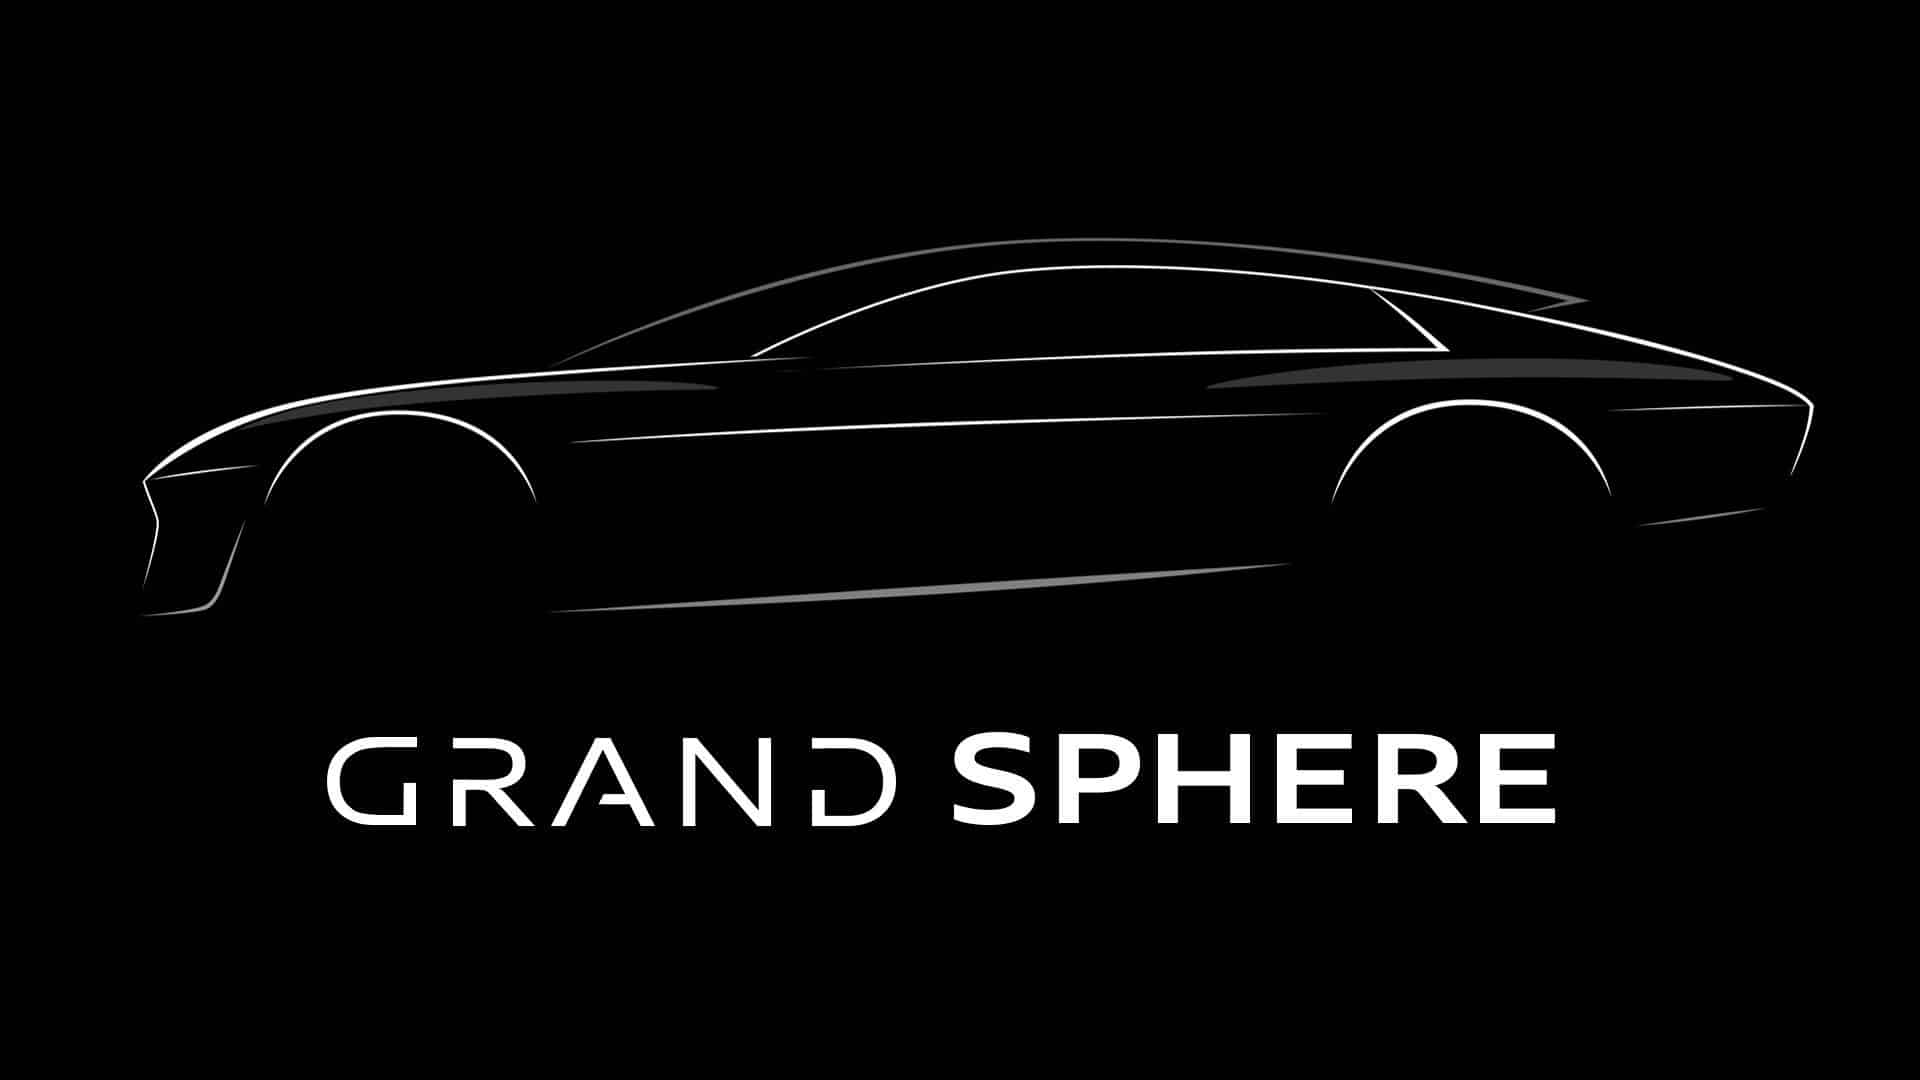 Audi prepara tres conceptuales